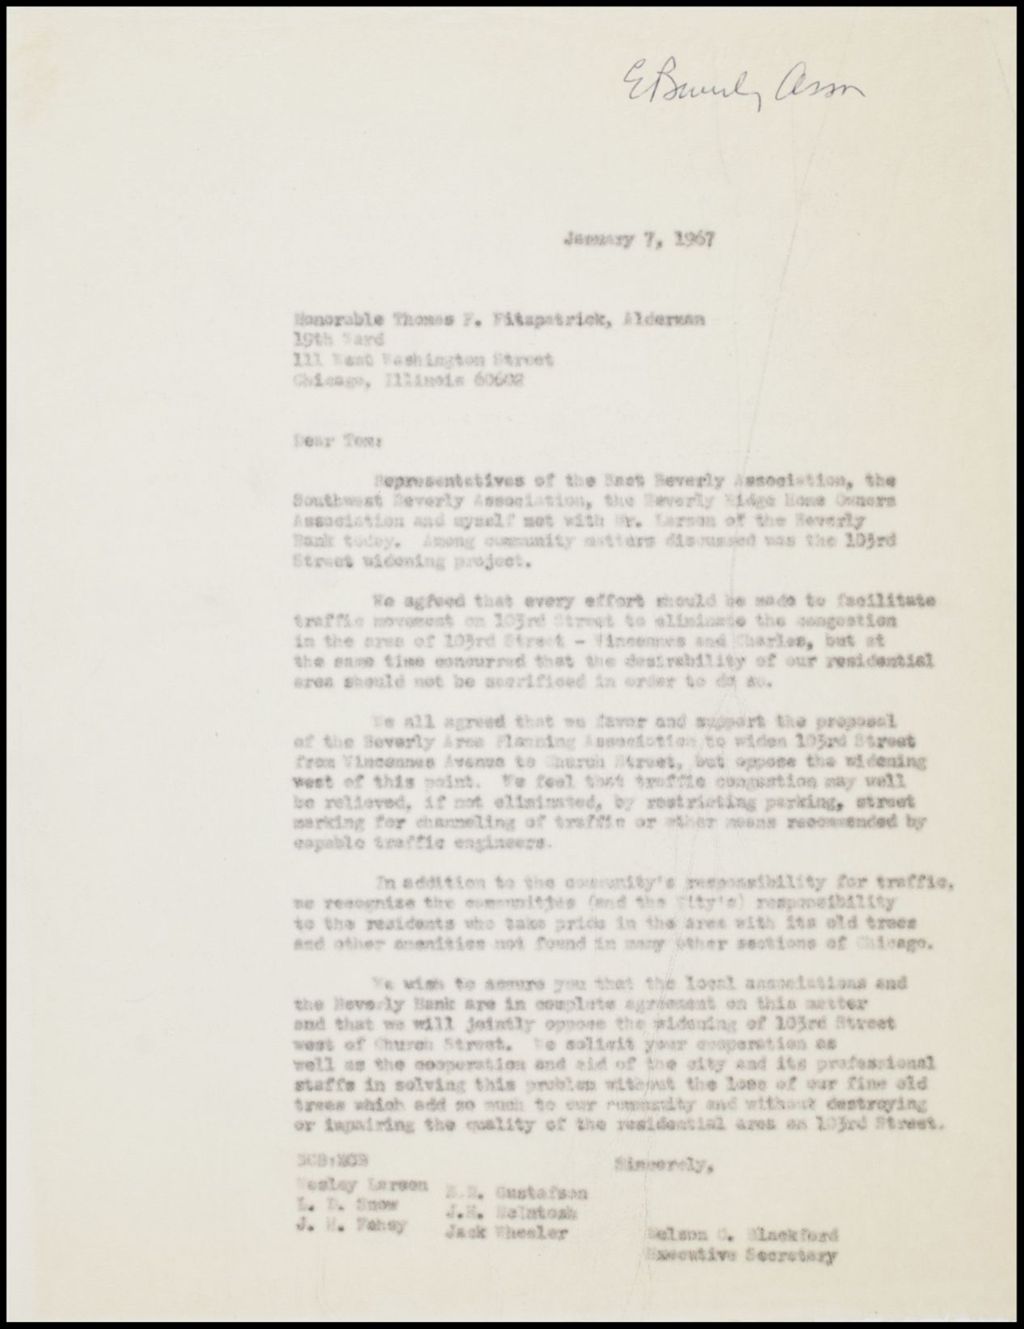 East Beverly Association - correspondence, 1967 (Folder 95)